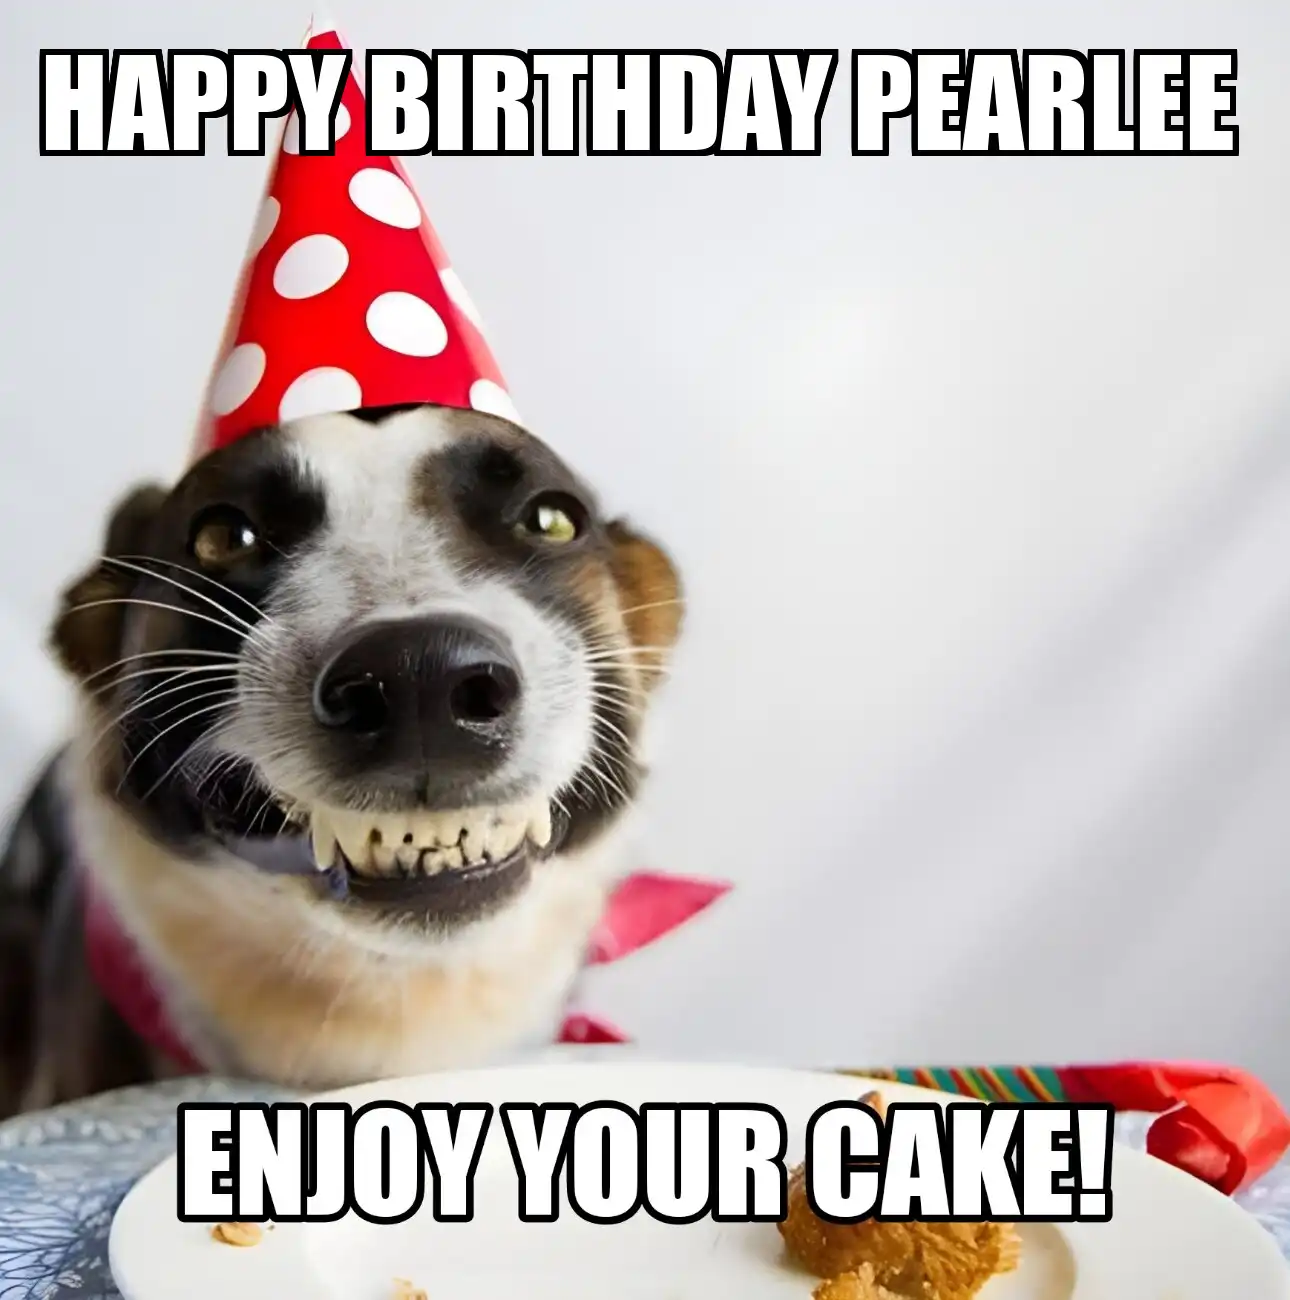 Happy Birthday Pearlee Enjoy Your Cake Dog Meme